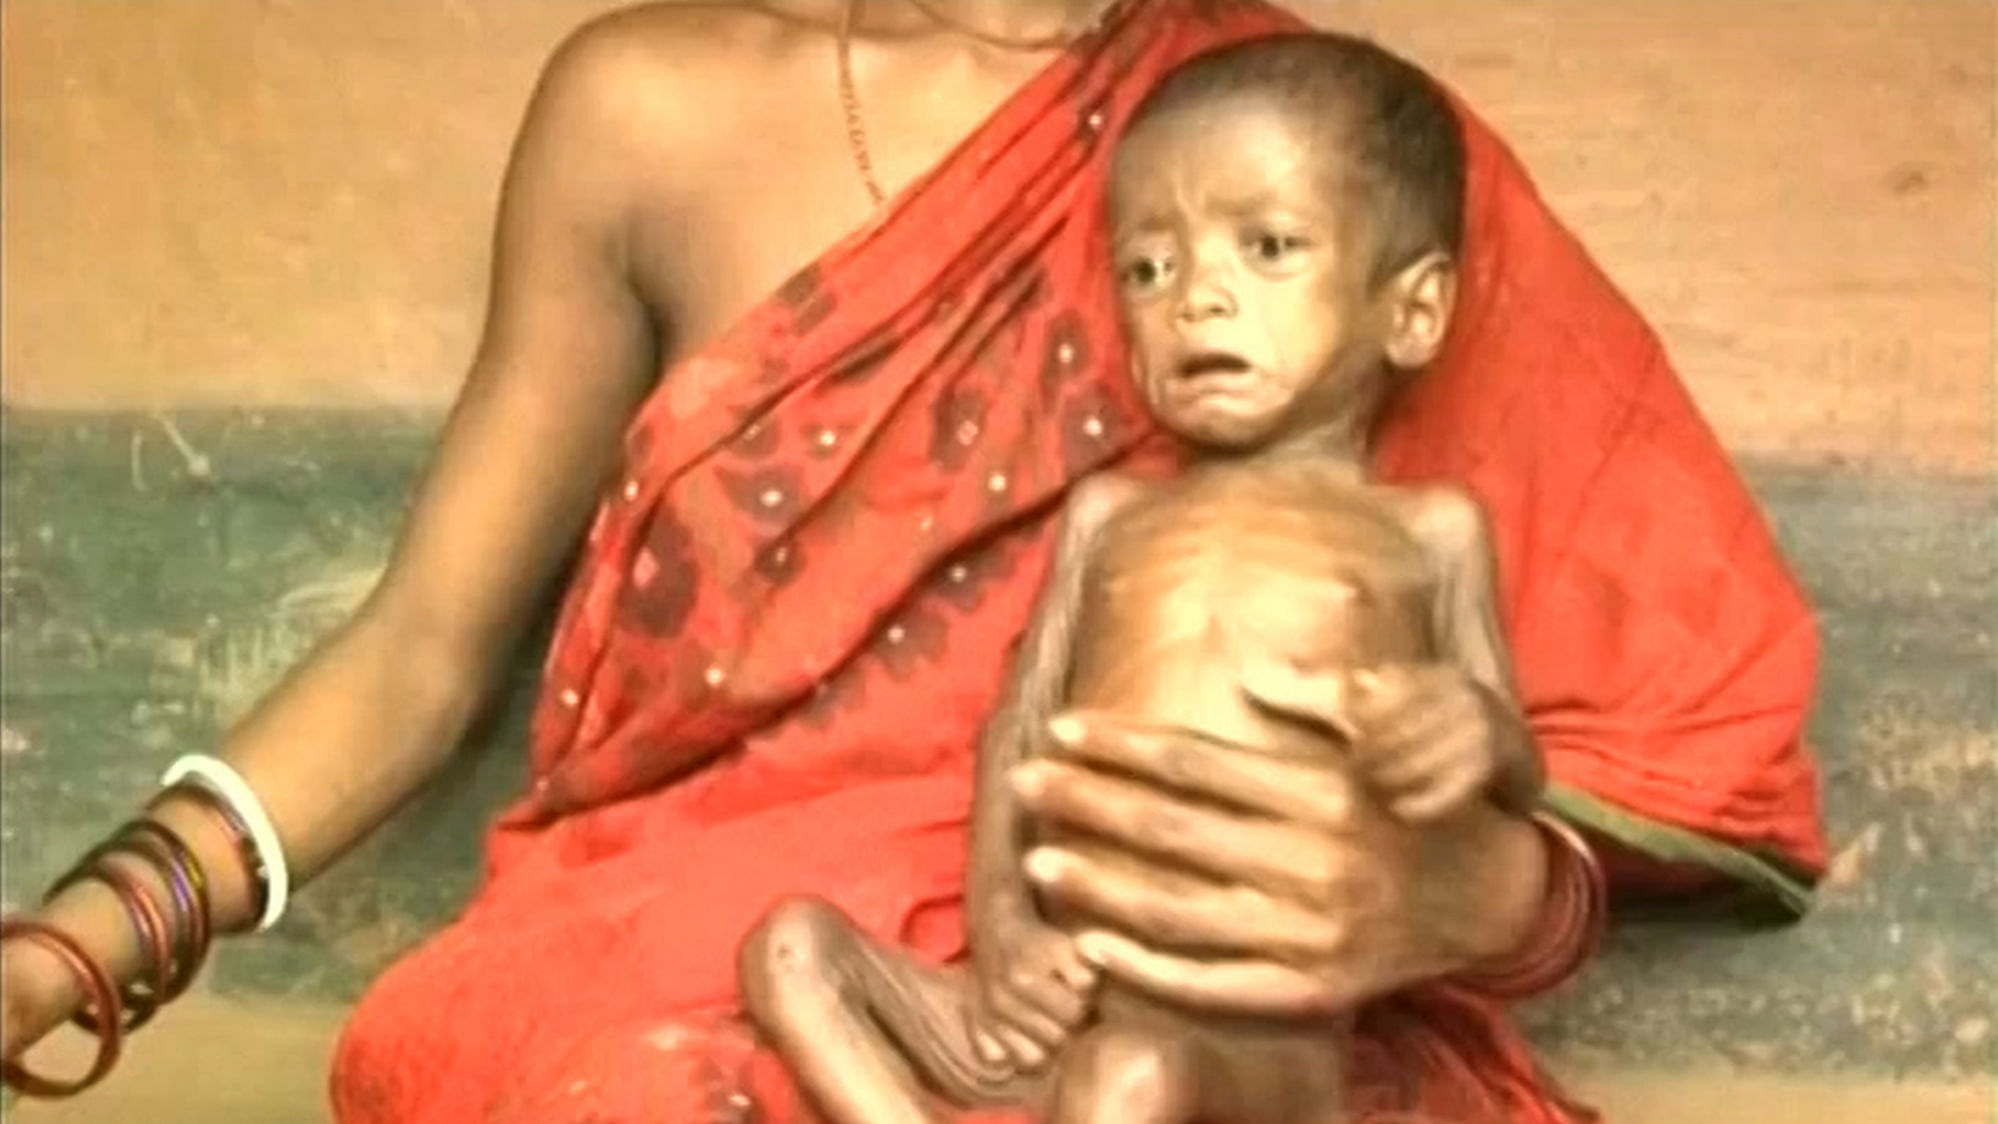 Representational Image: A malnourished infant in Nagada village in Odisha’s Jajpur district.(Photo: ANI screengrab)